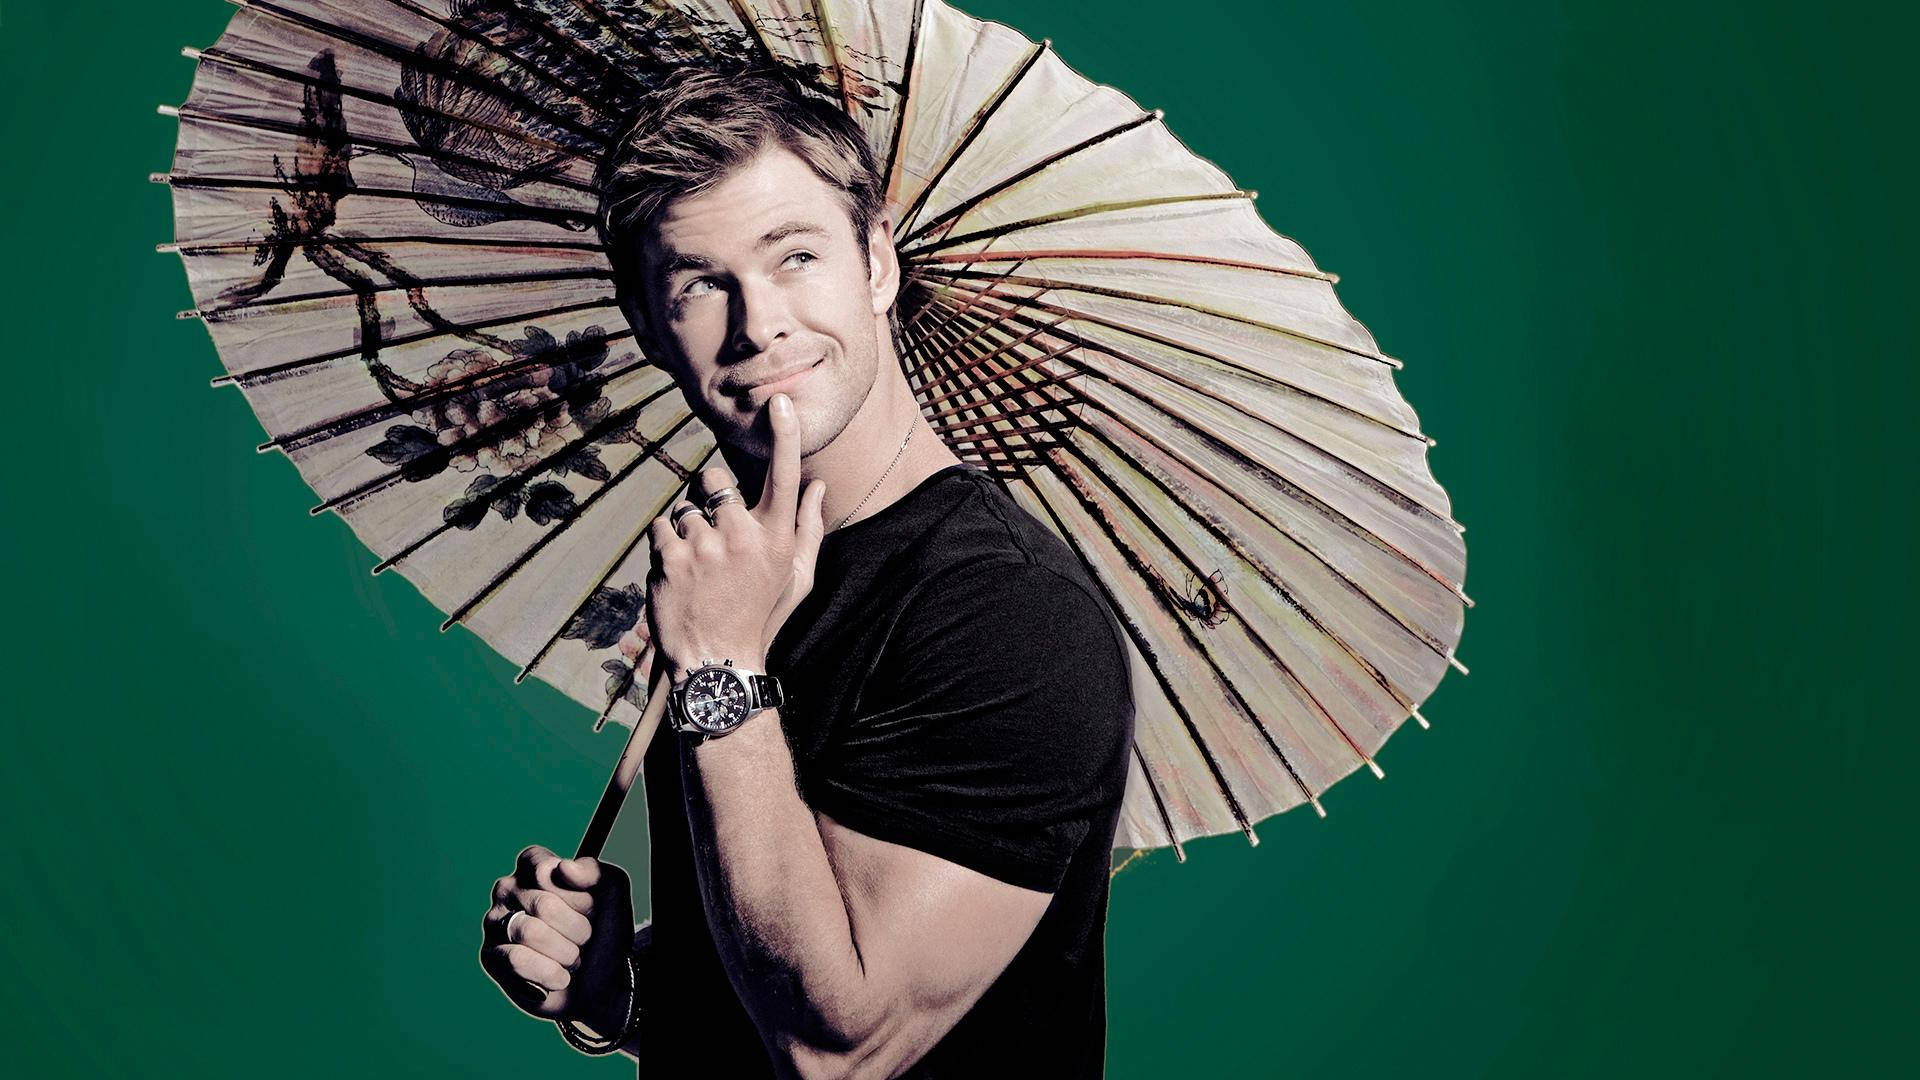 Chris Hemsworth With An Umbrella